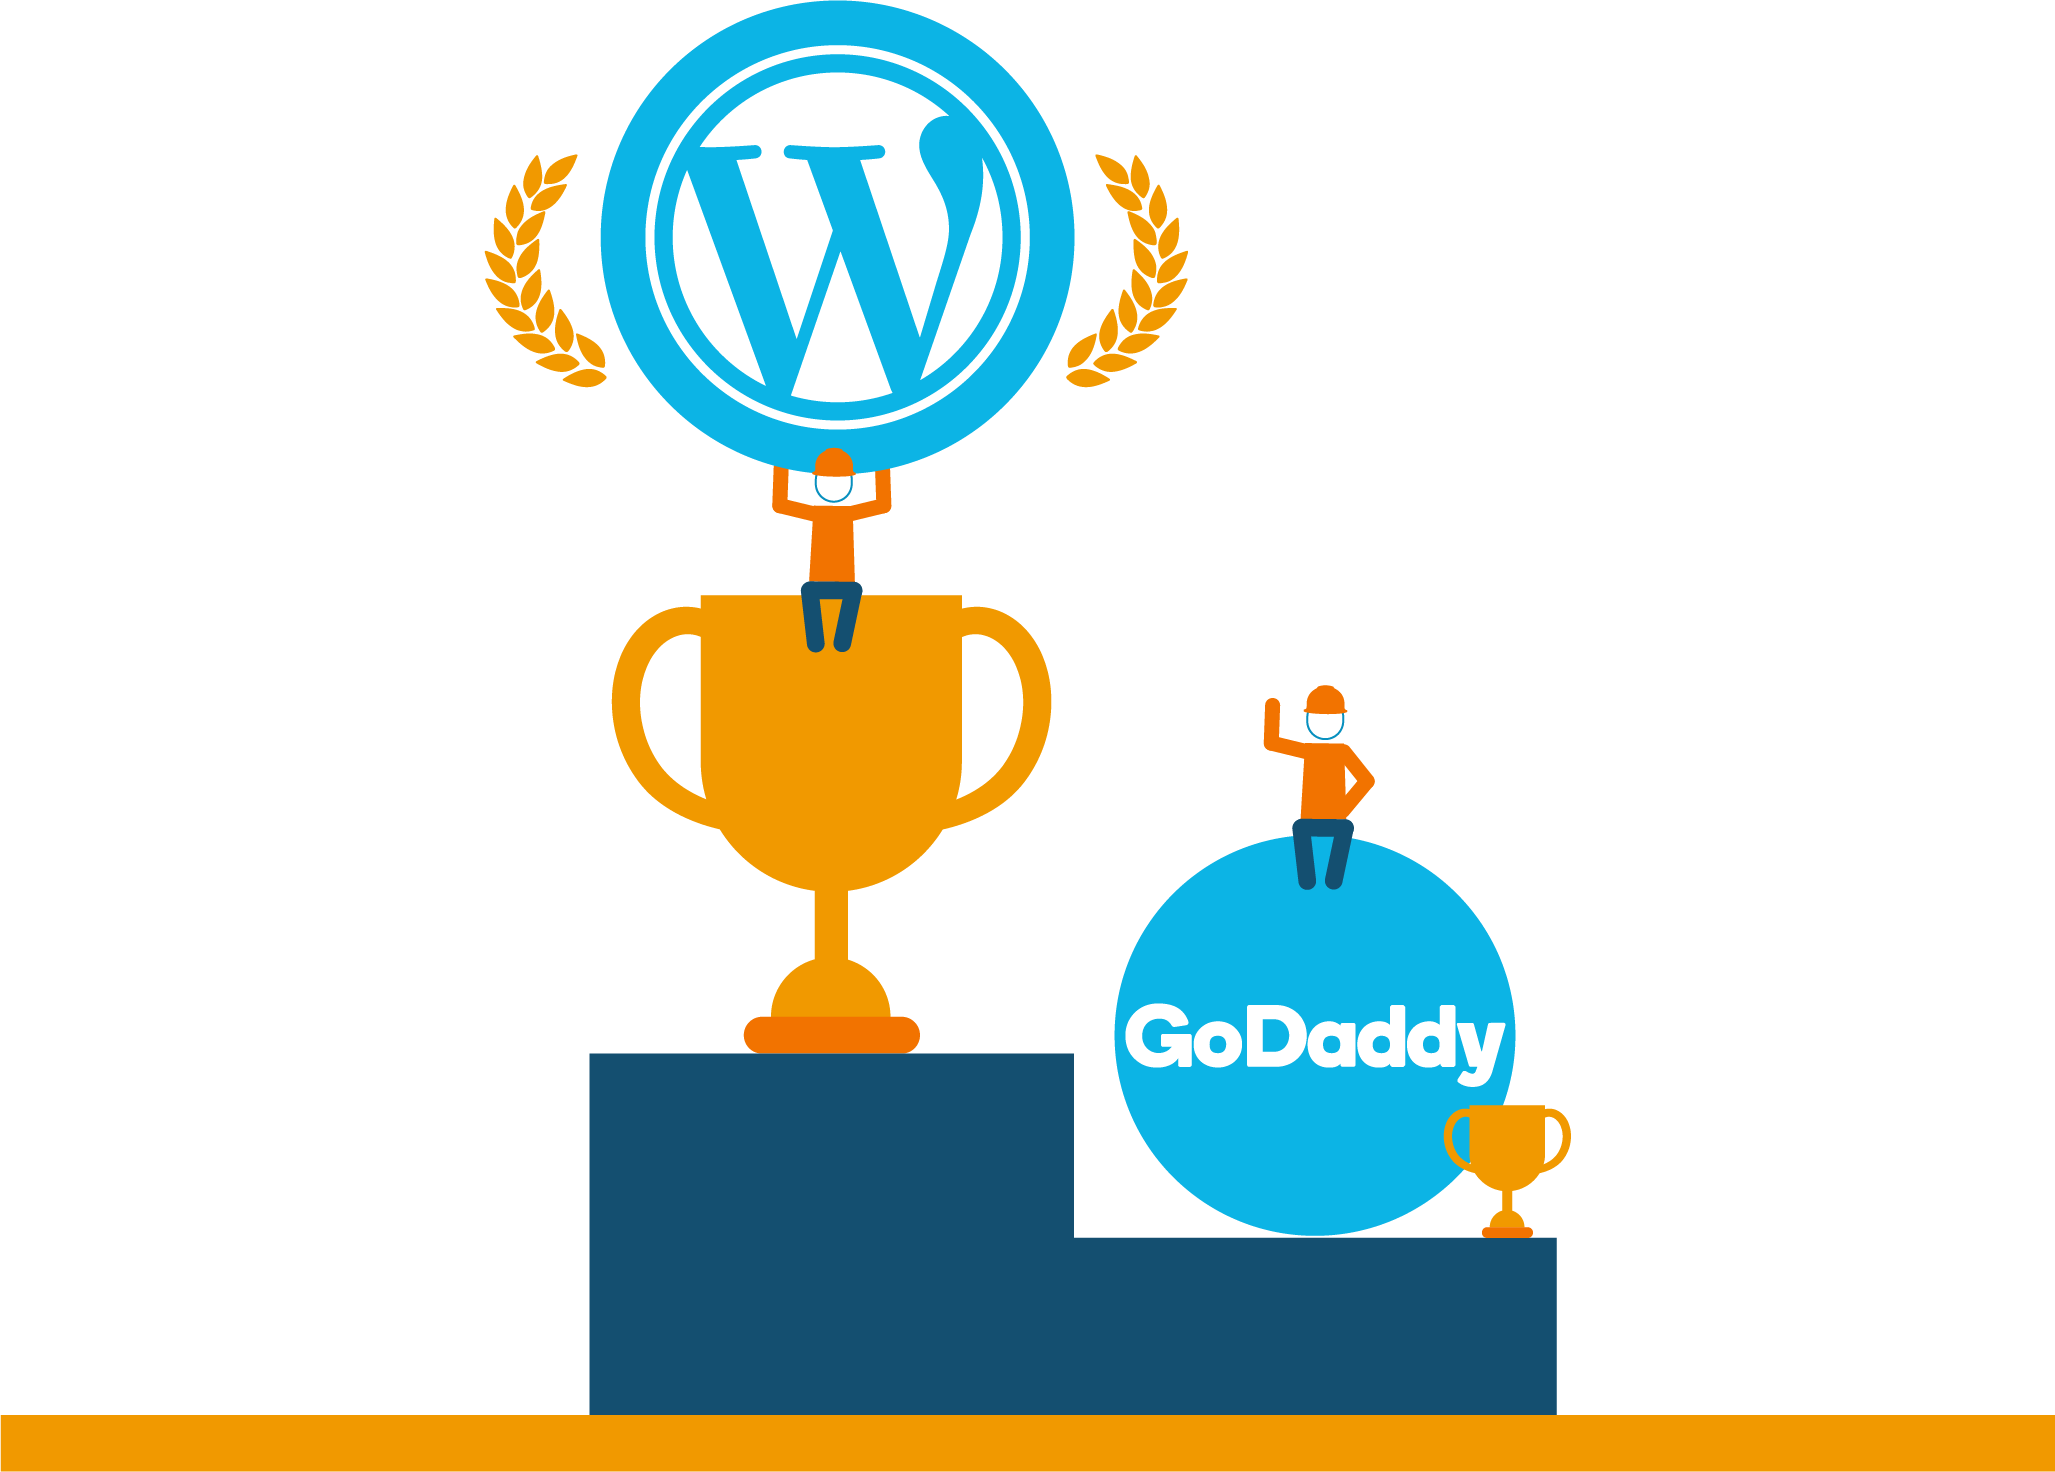 Godaddy Website Builder vs Wordpress: Who's the Best?